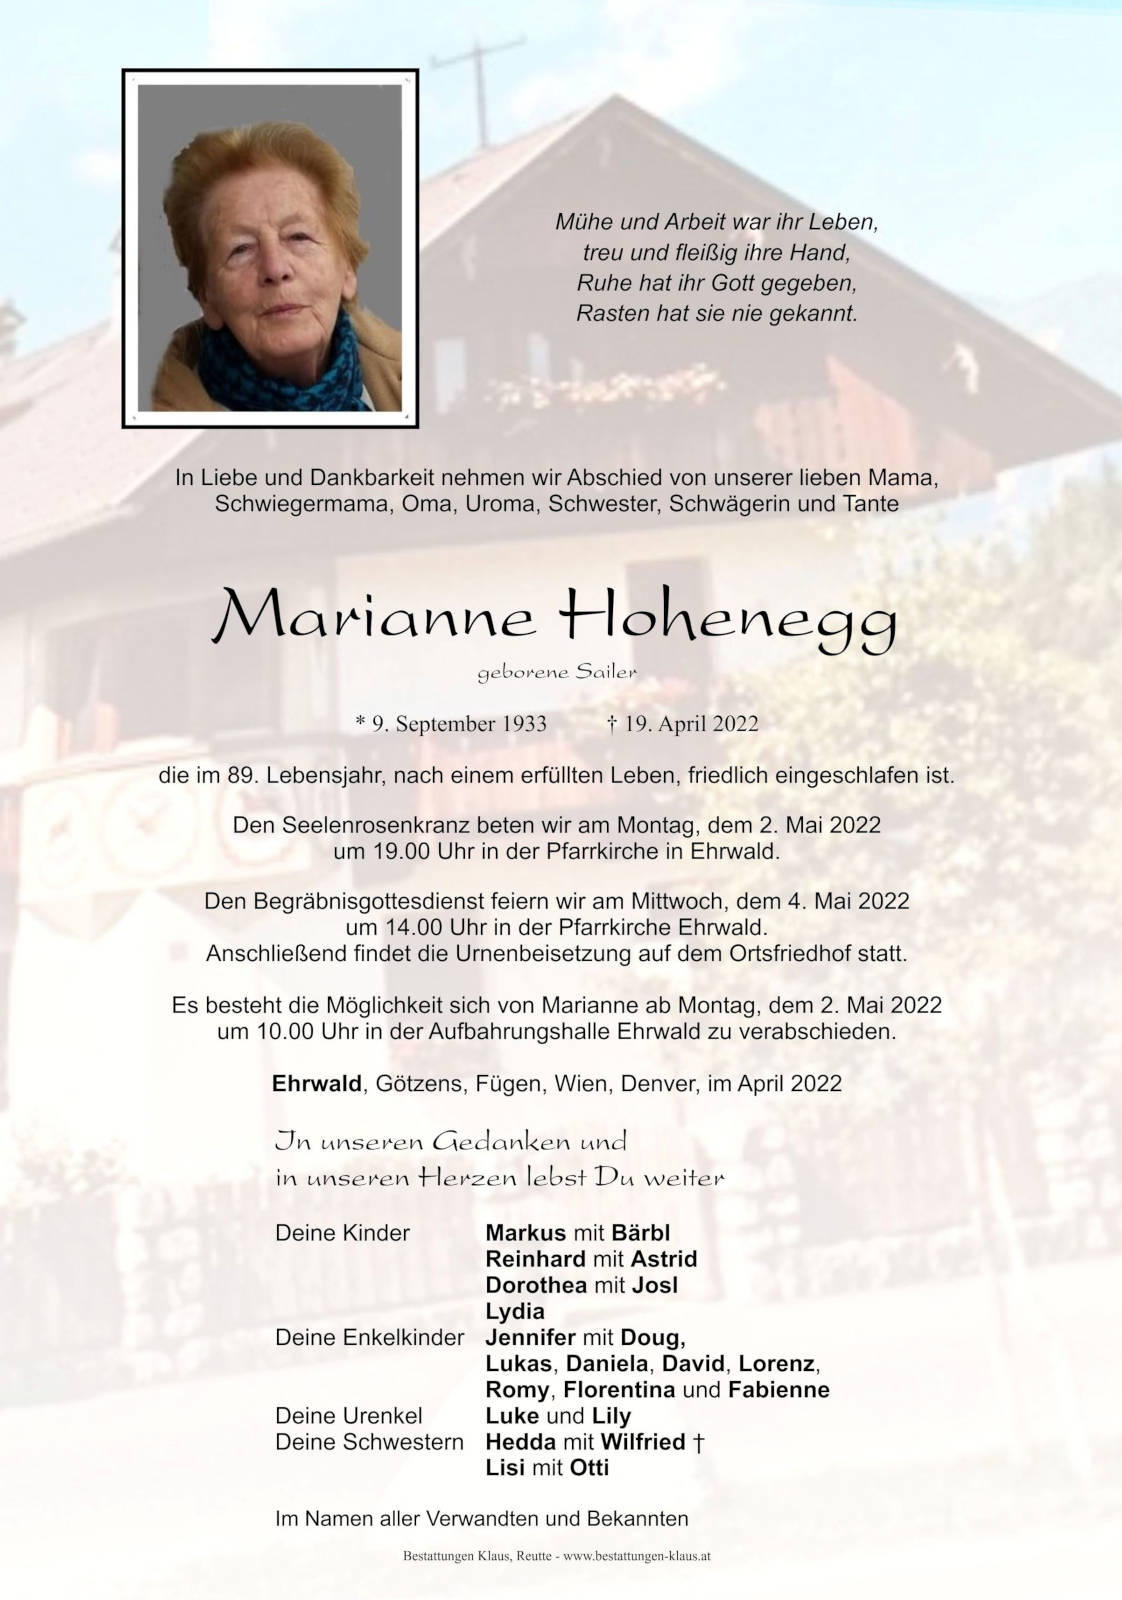 Marianne Hohenegg